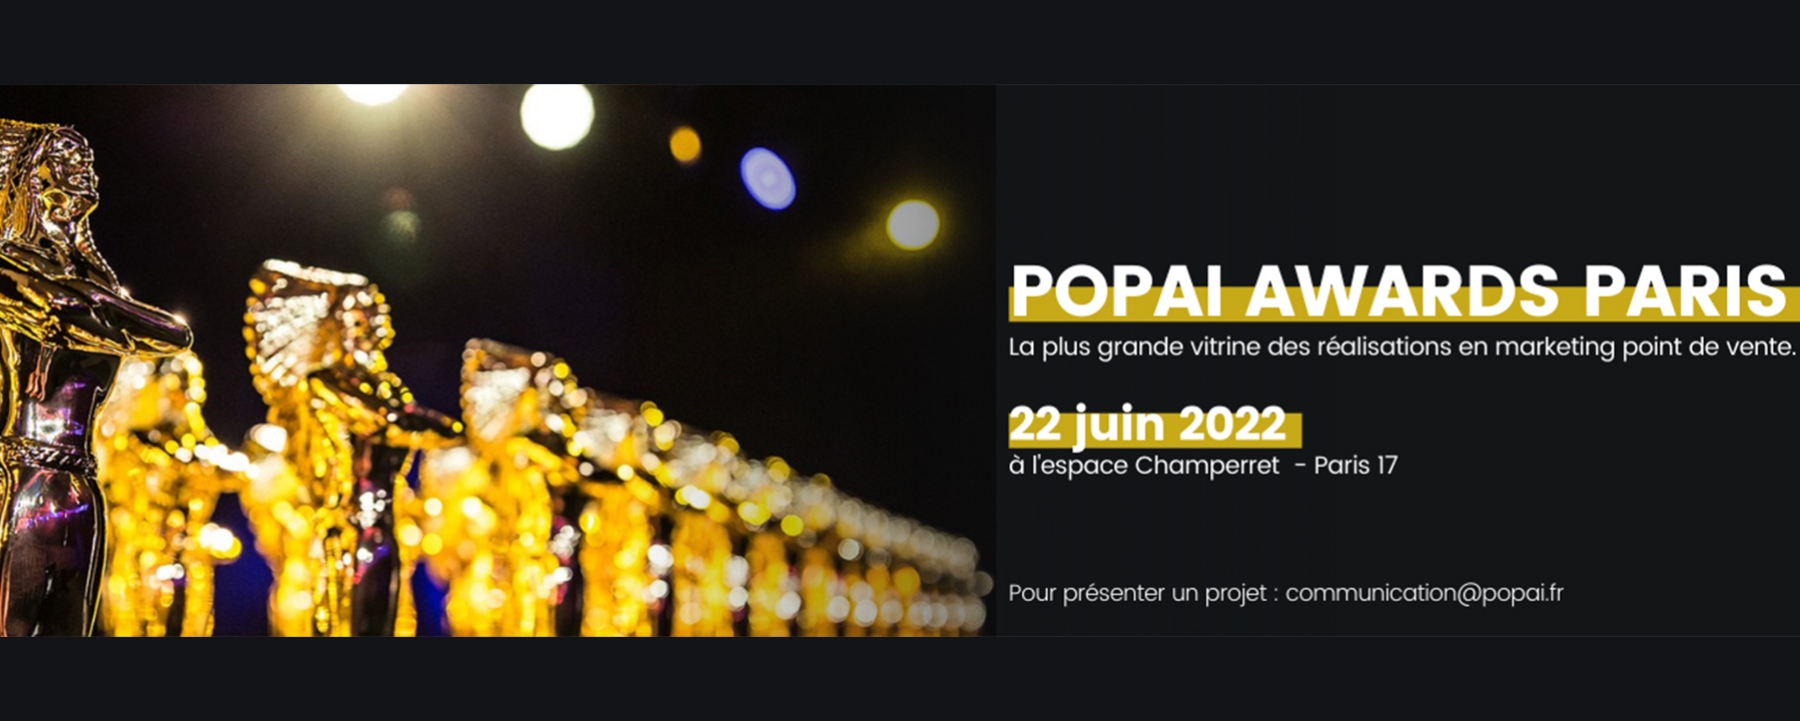 OPAI AWARDS PARIS 2022.